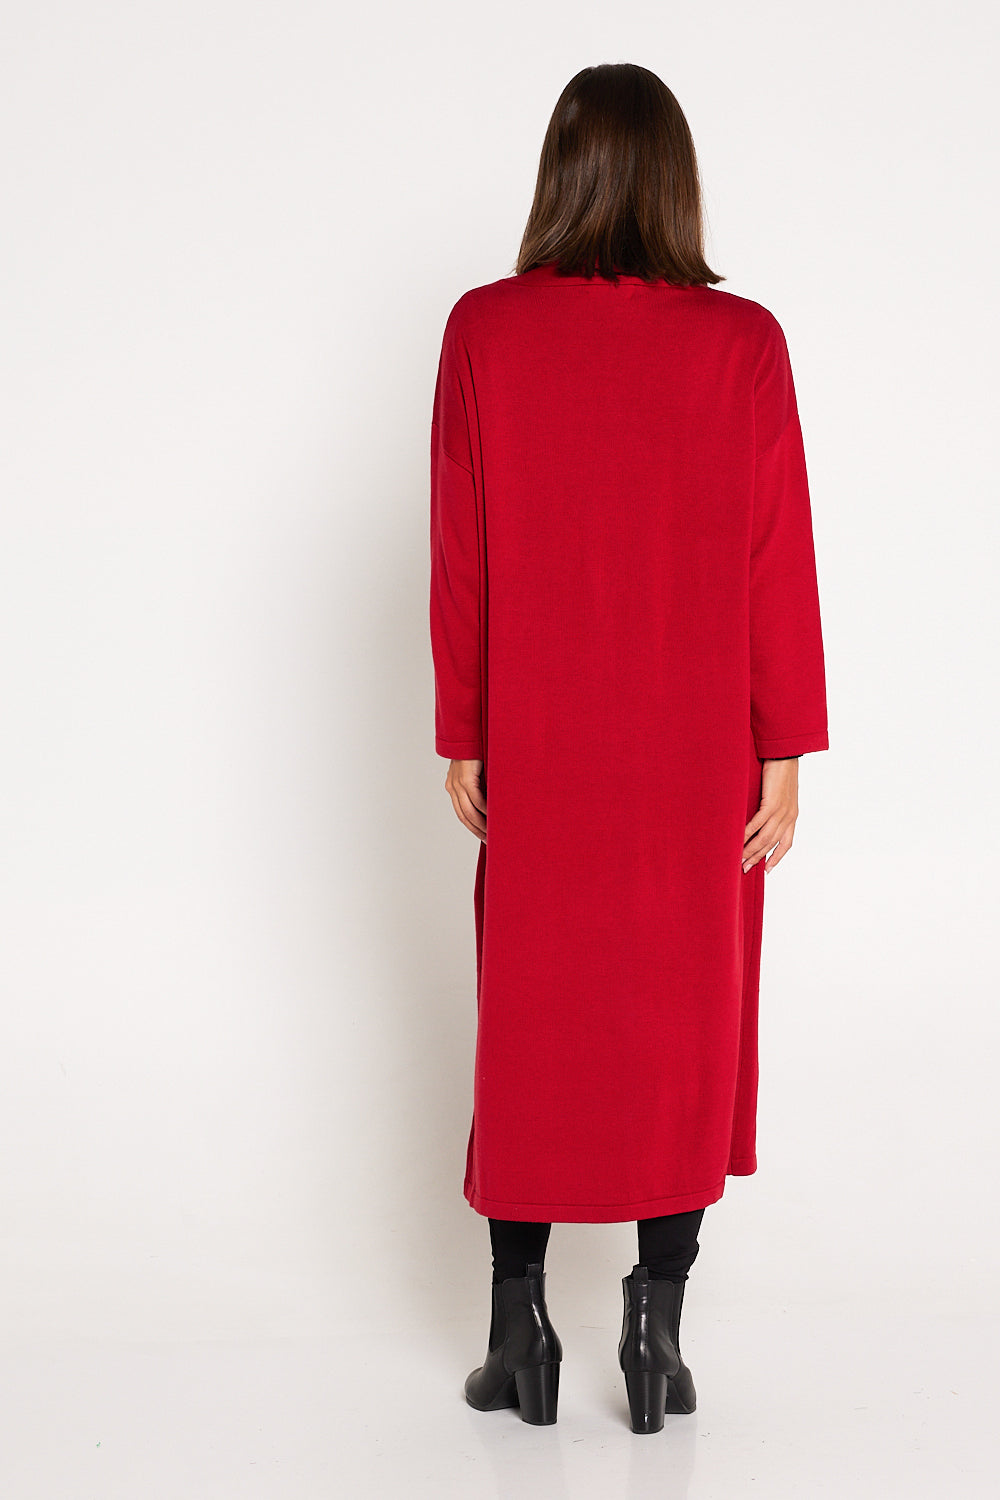 Kacela Knit Tunic - Red